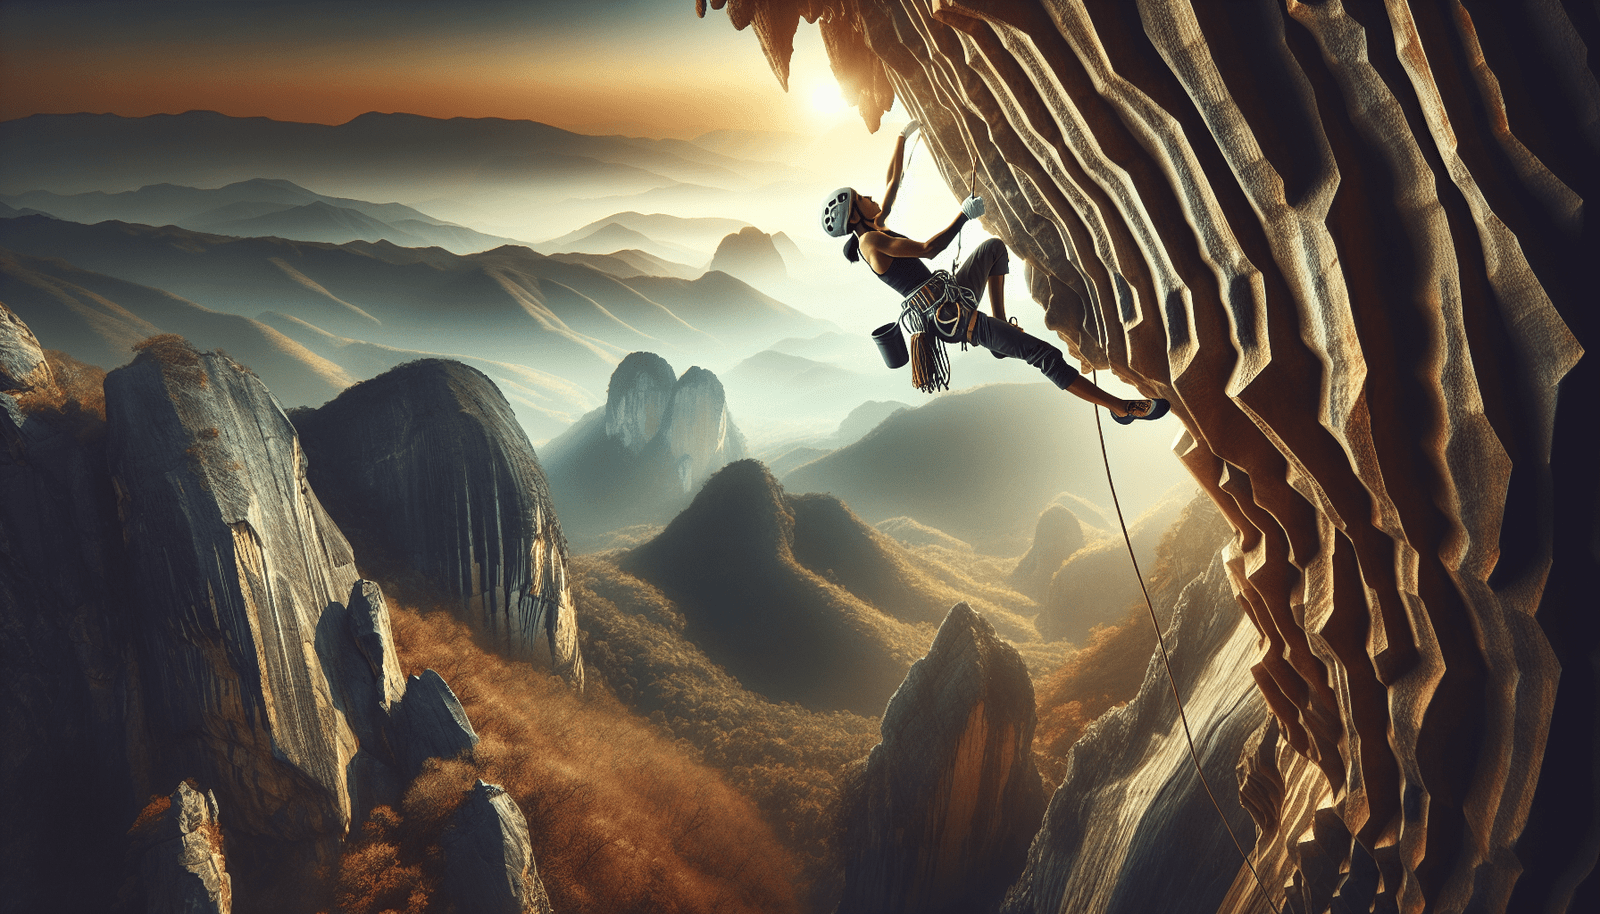 Rock Climbing Adventures